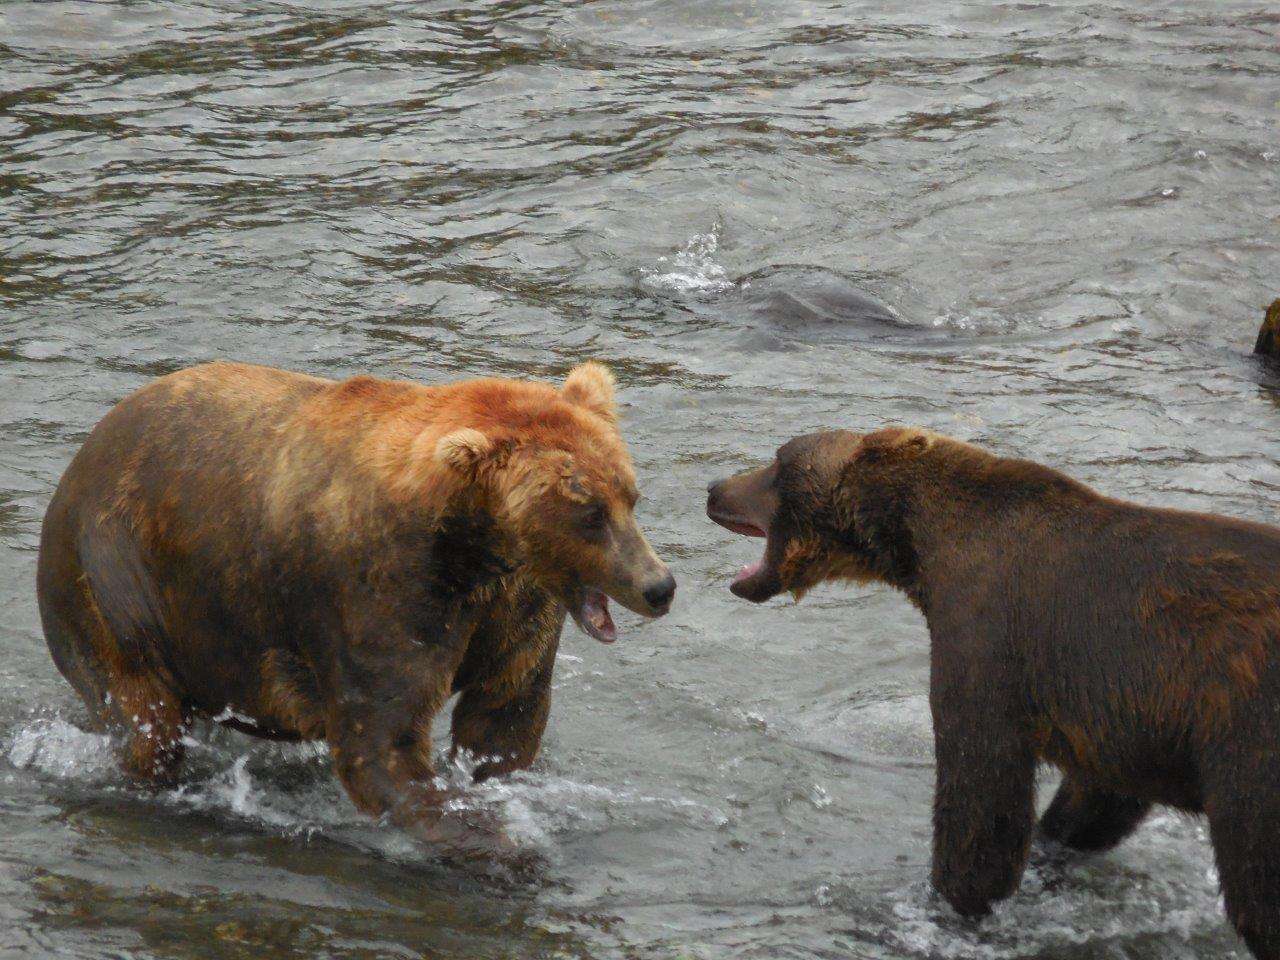 Two brown bears in a river in Alaska.